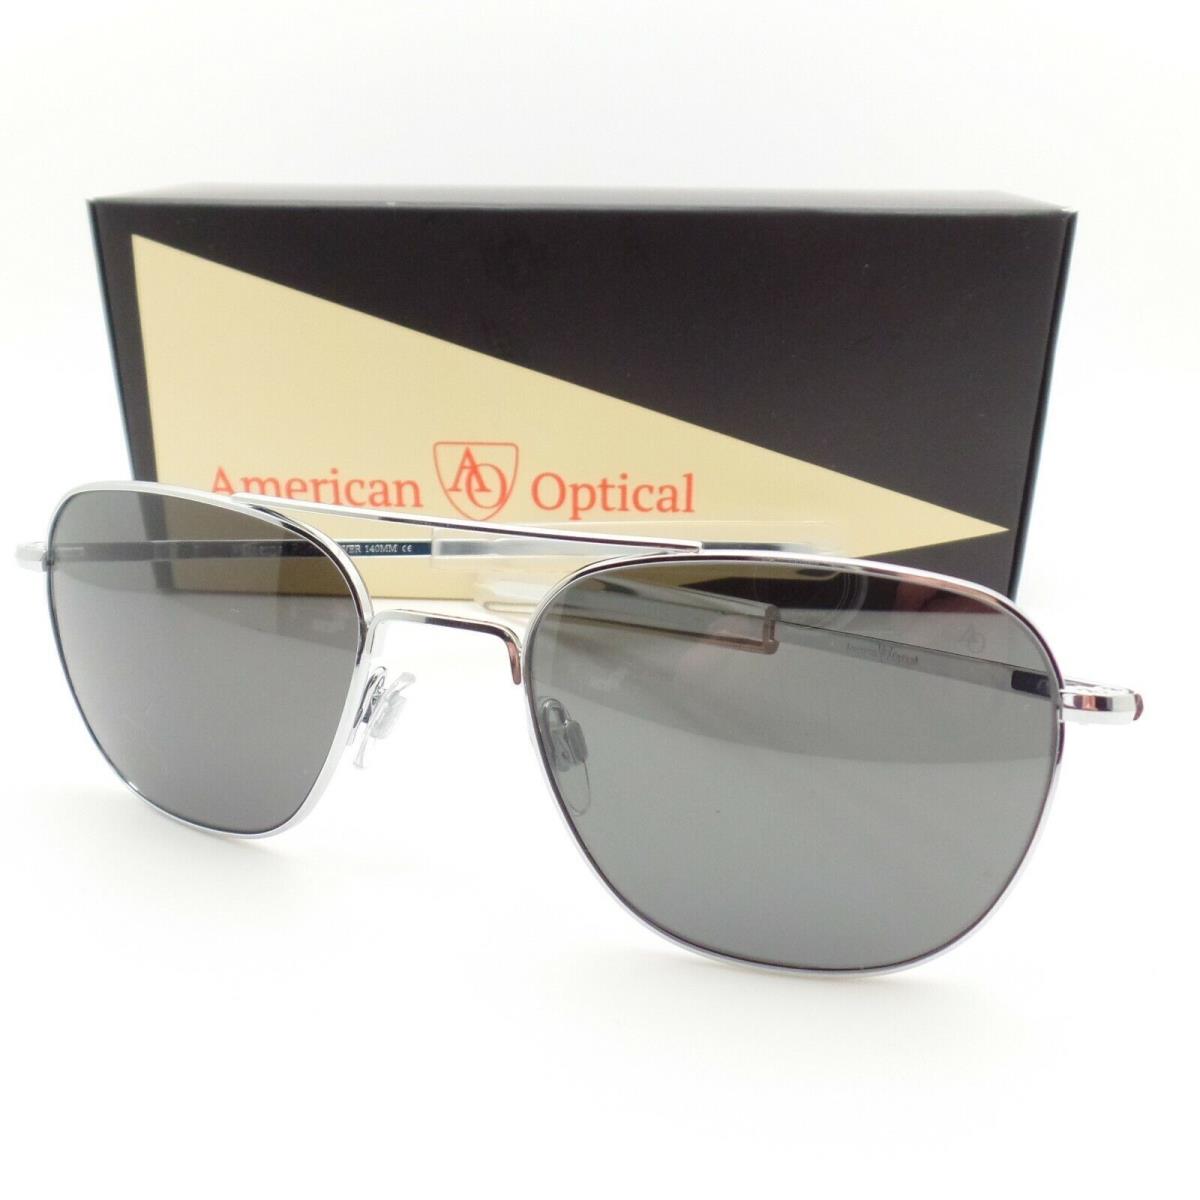 American Optical Original Pilot AO American Optical Pilot Silver Grey Lens Options Sunglasses